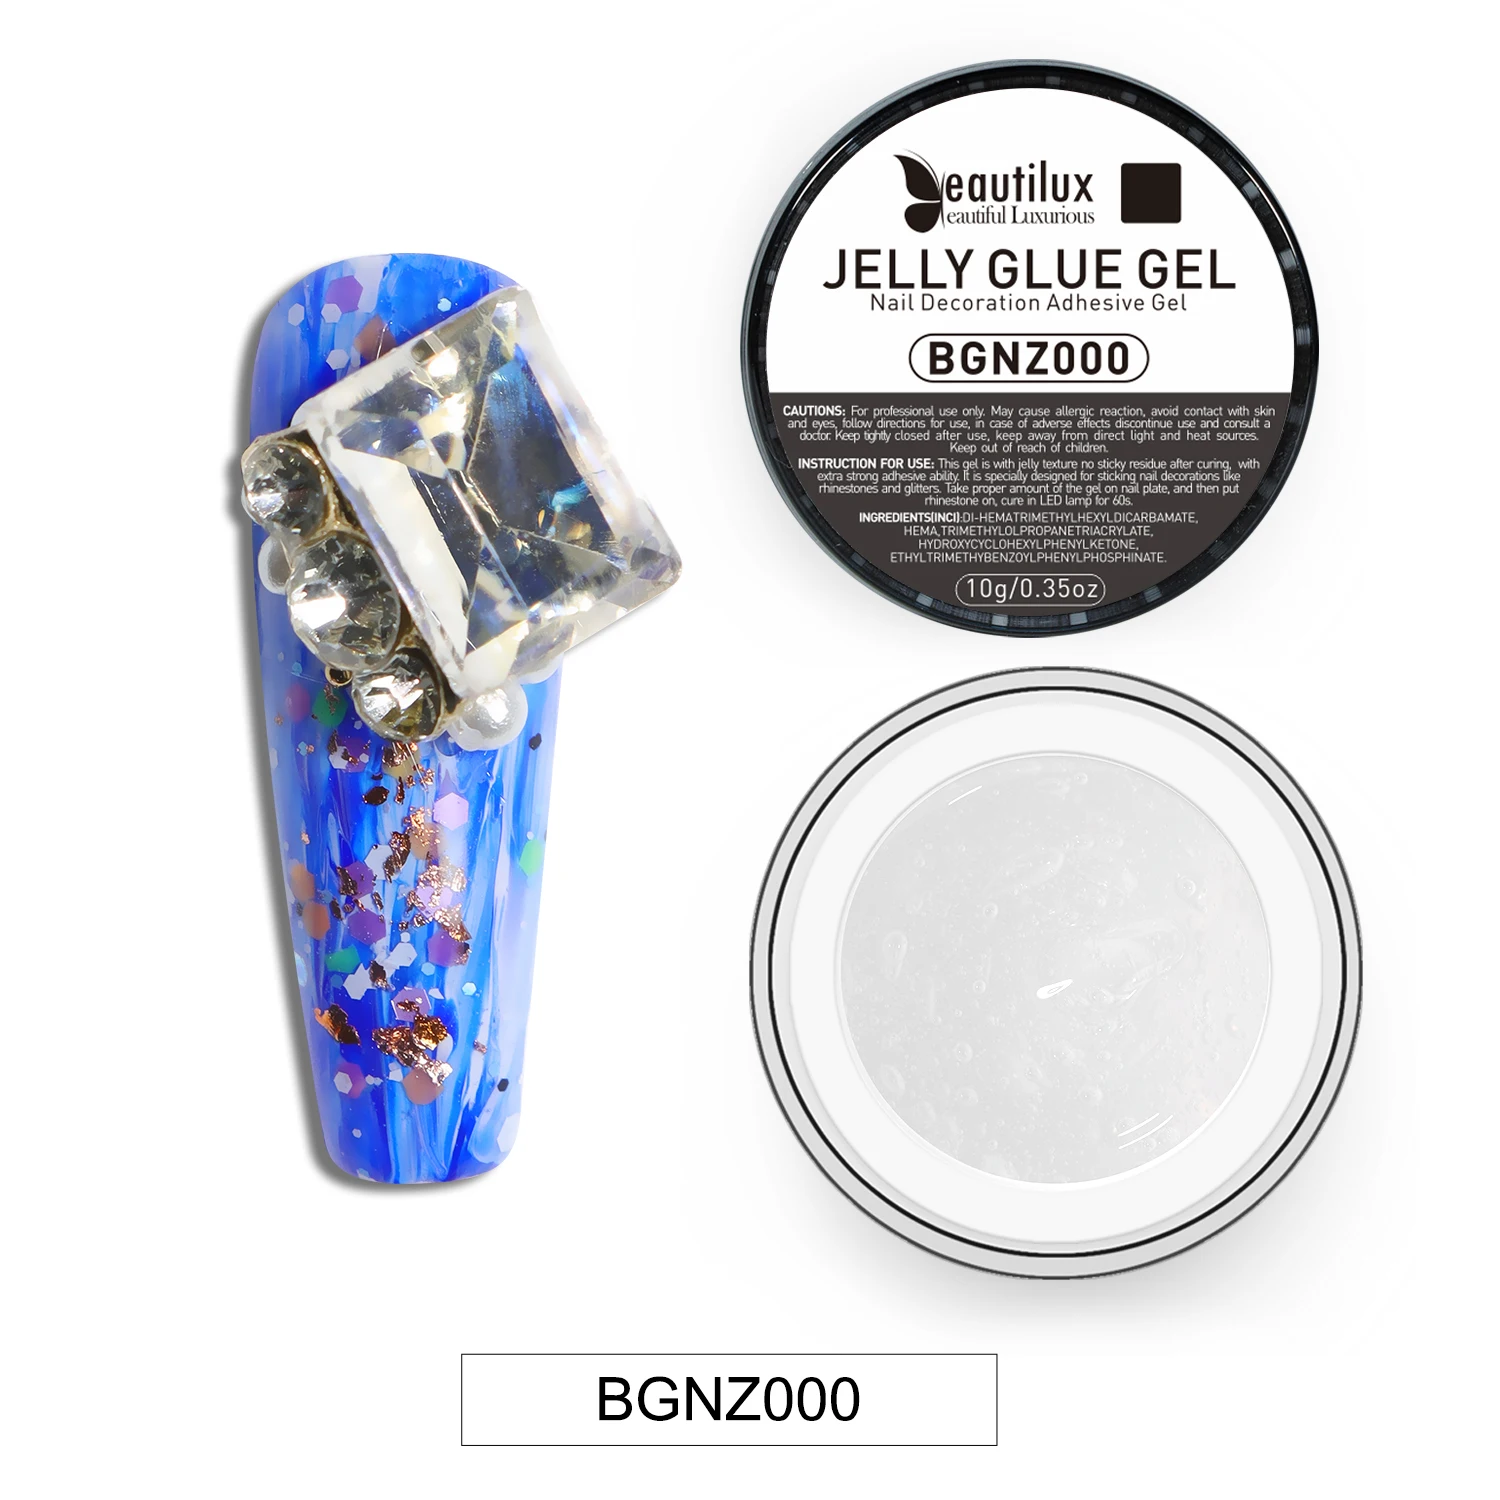 Beautilux Jelly Glue Gel Adhesive Gel 10g